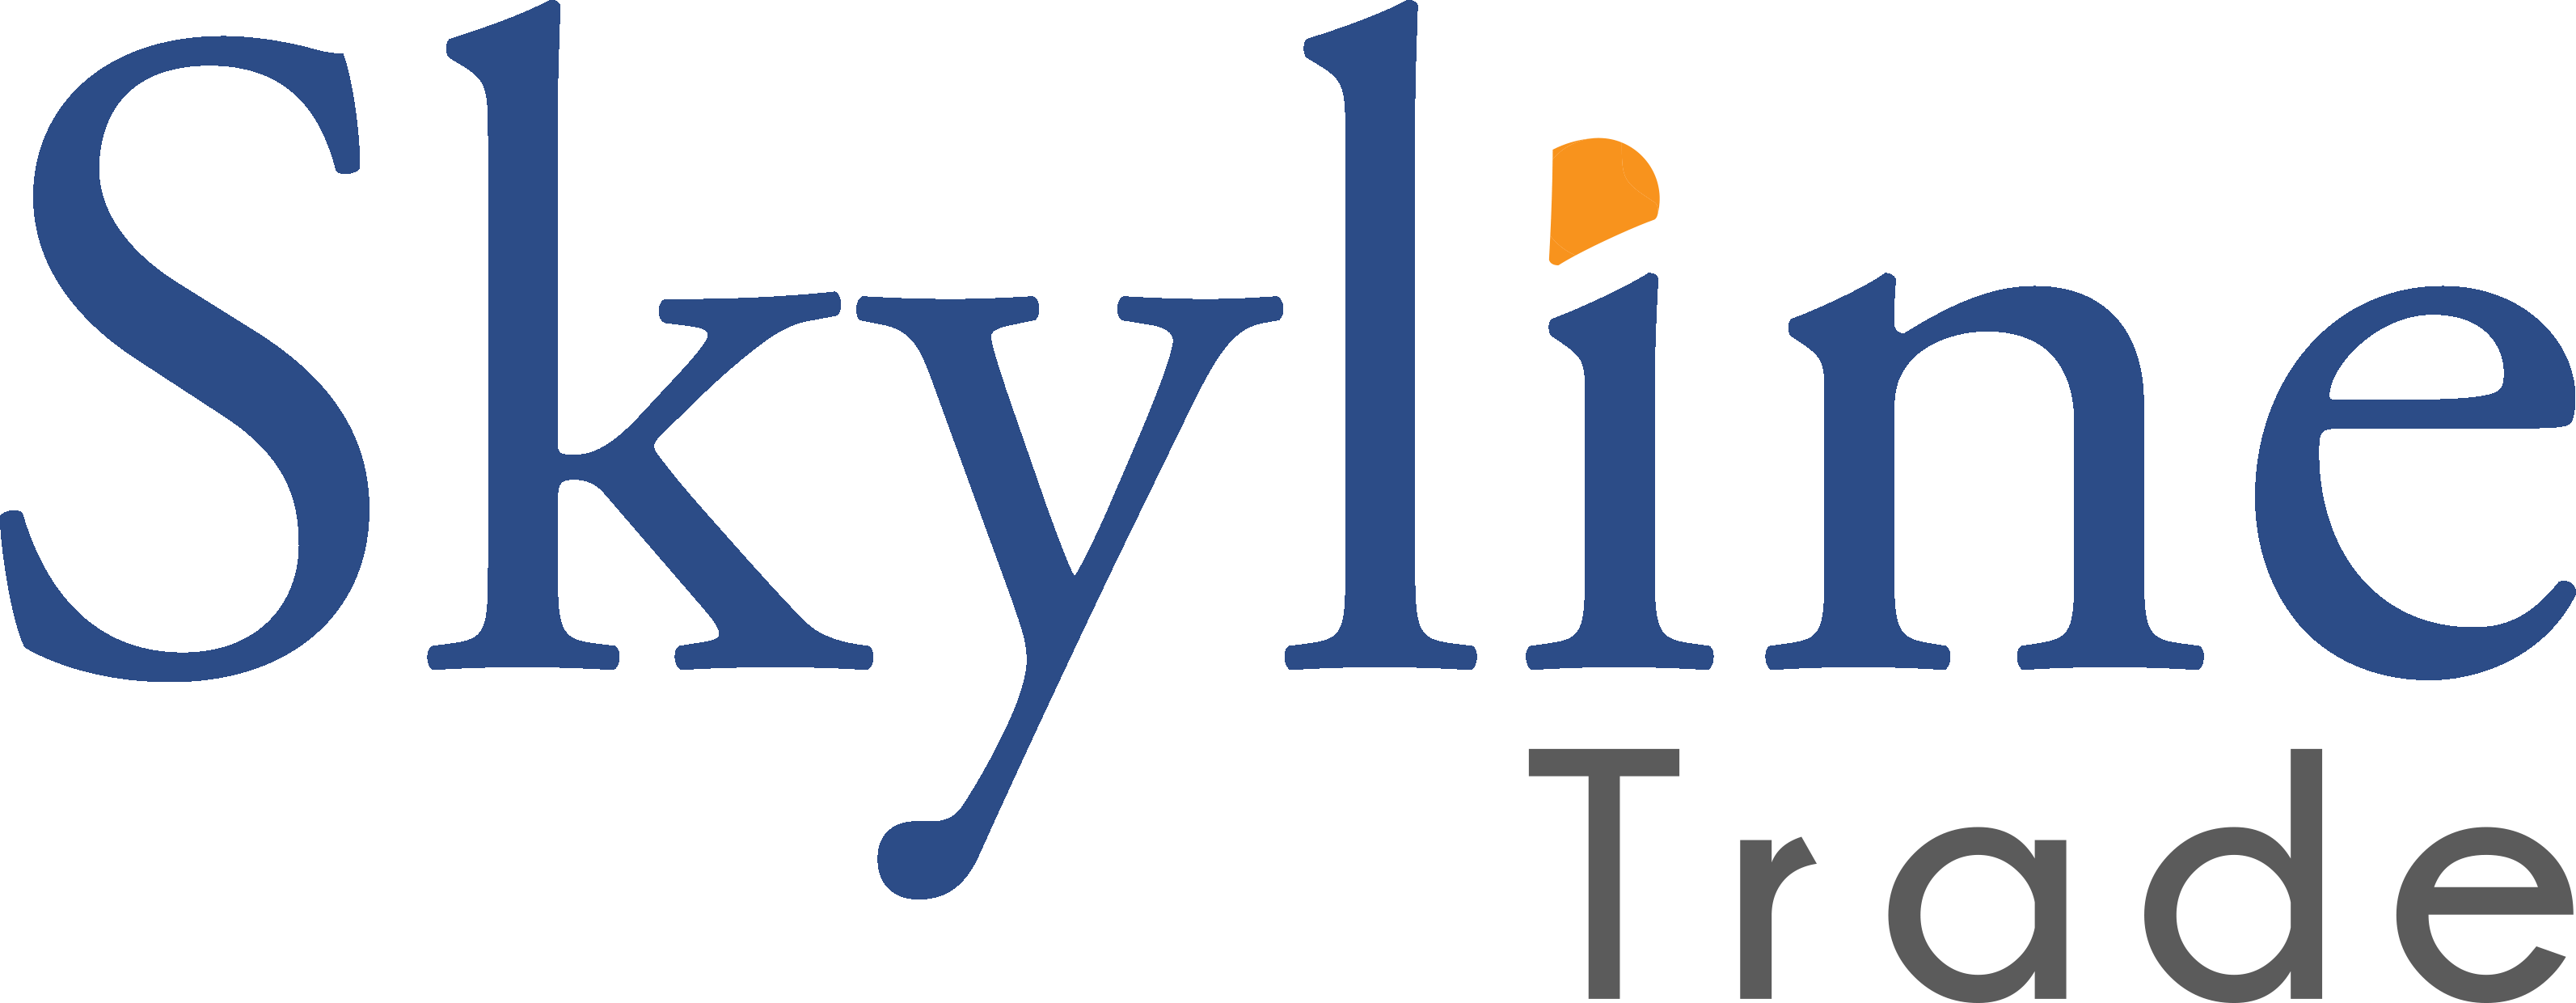 Skyline Trade LLC